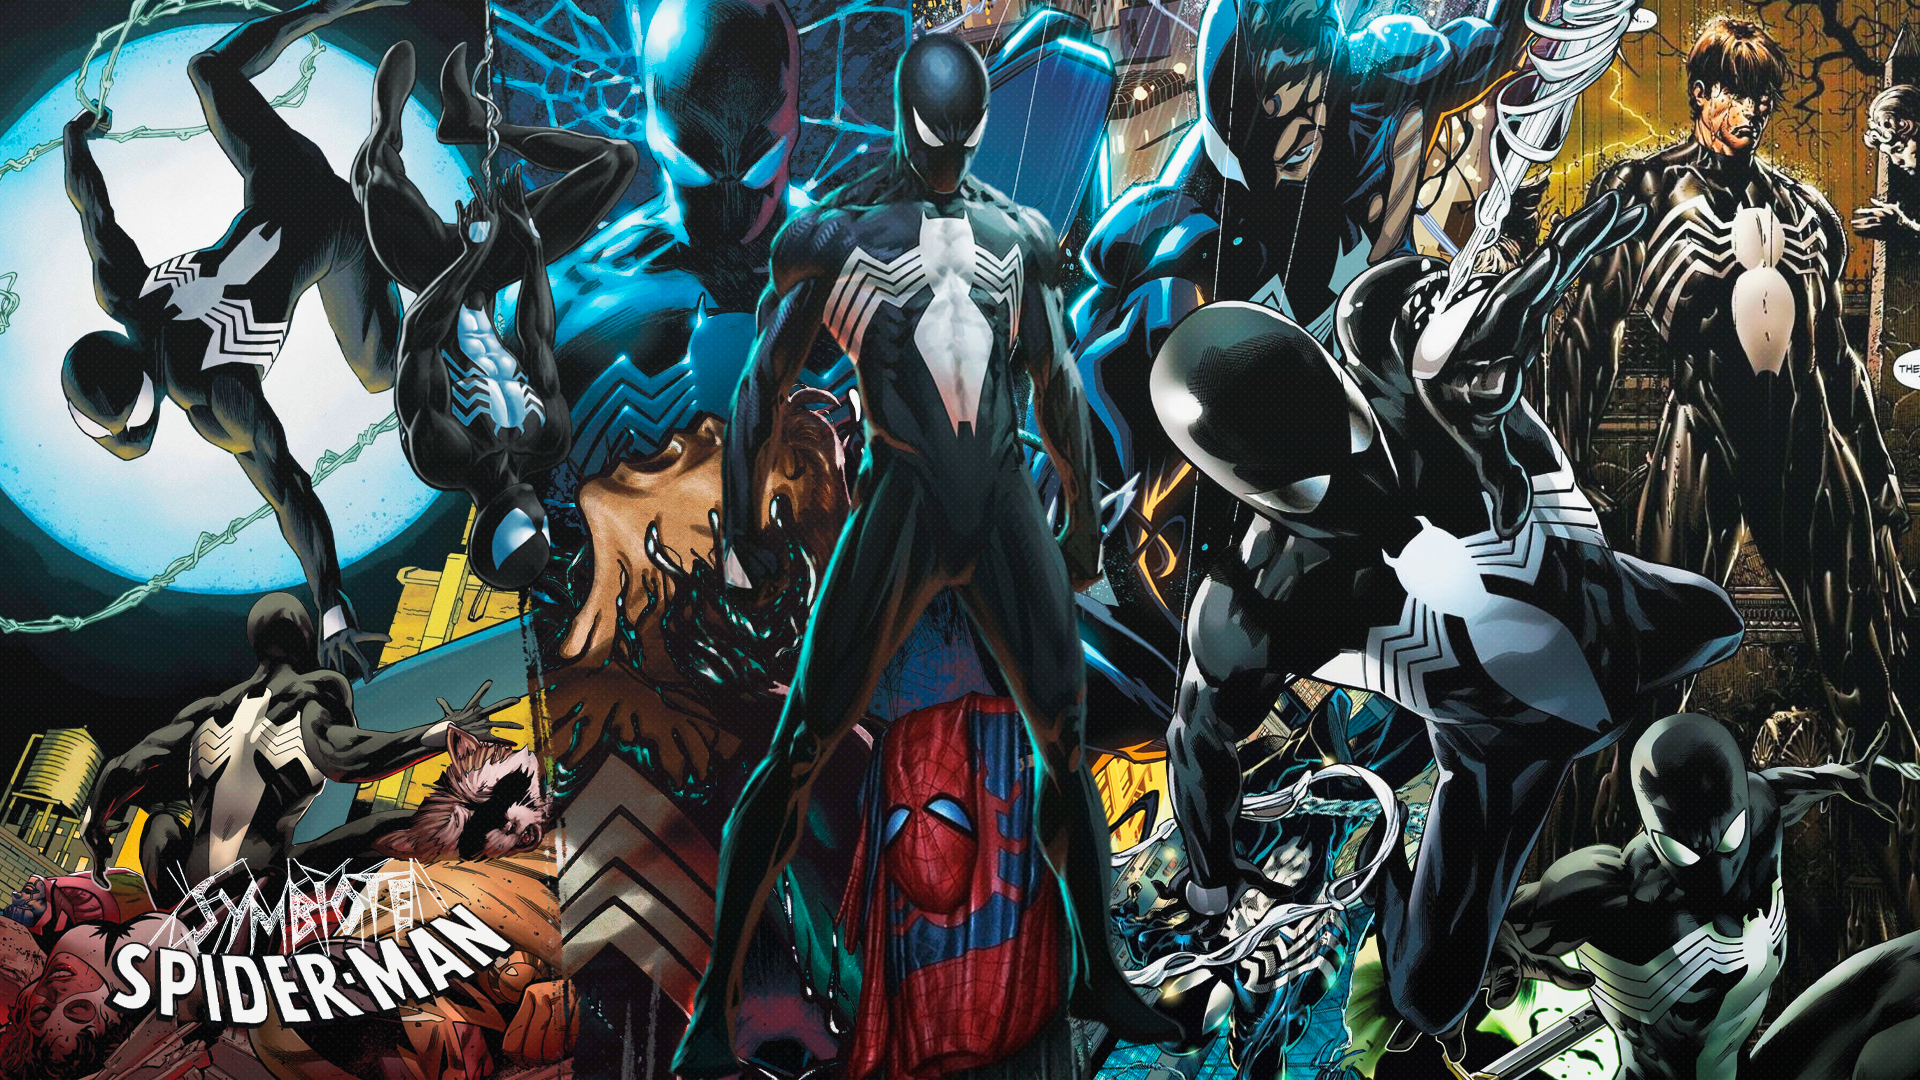 General 1920x1080 Spider-Man Venom collage Marvel Comics marvel character muscles DinocoZero superhero digital art comic art comics